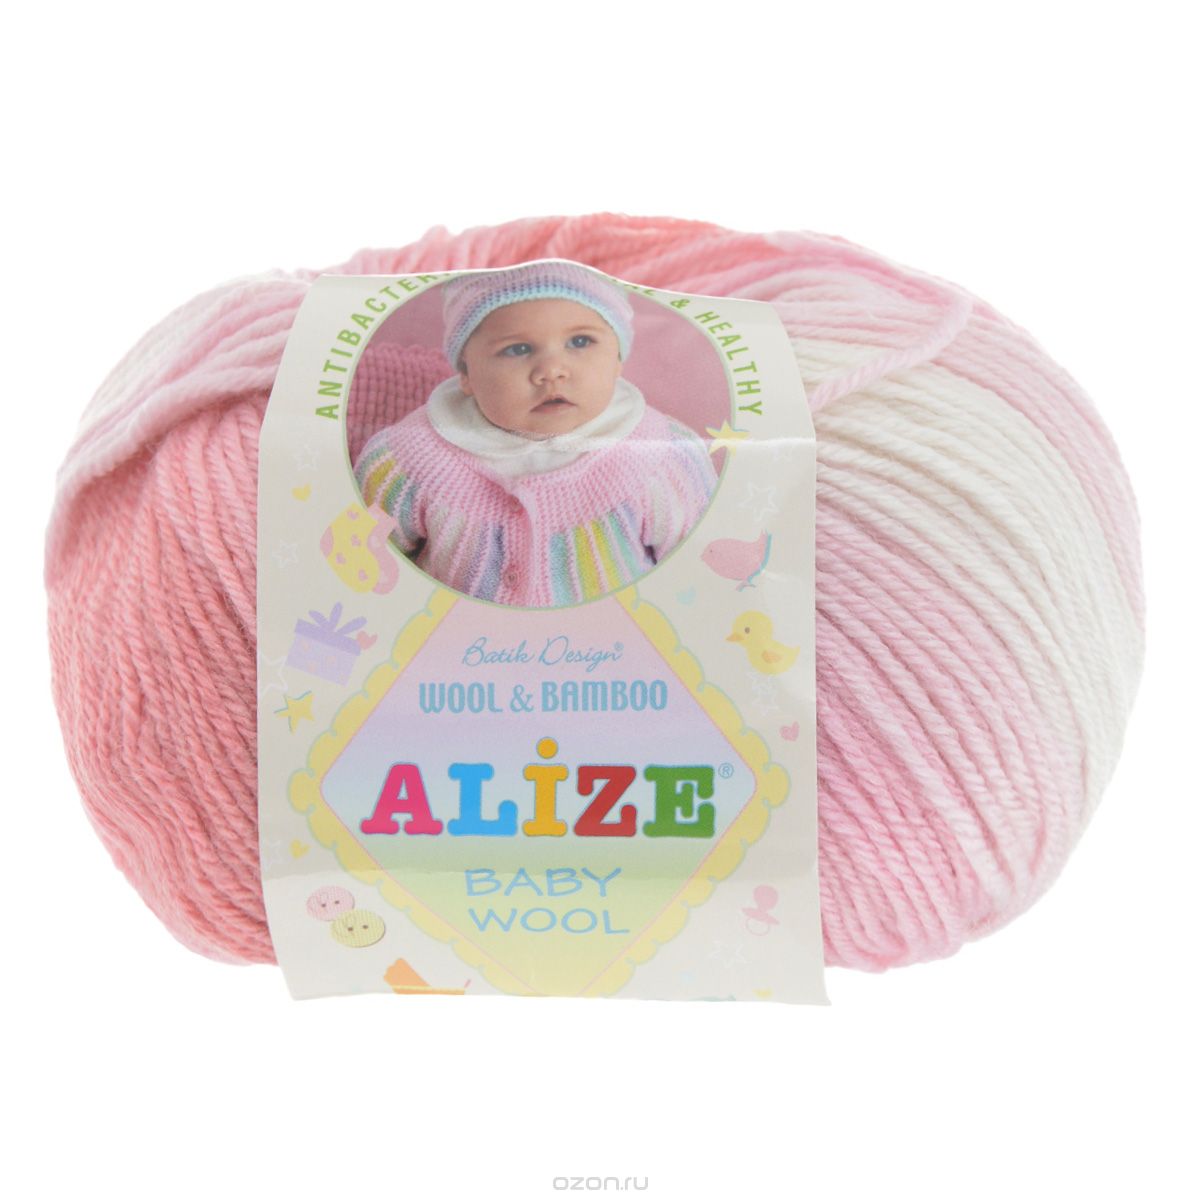 Baby Wool Batik 3565 бело-розовый